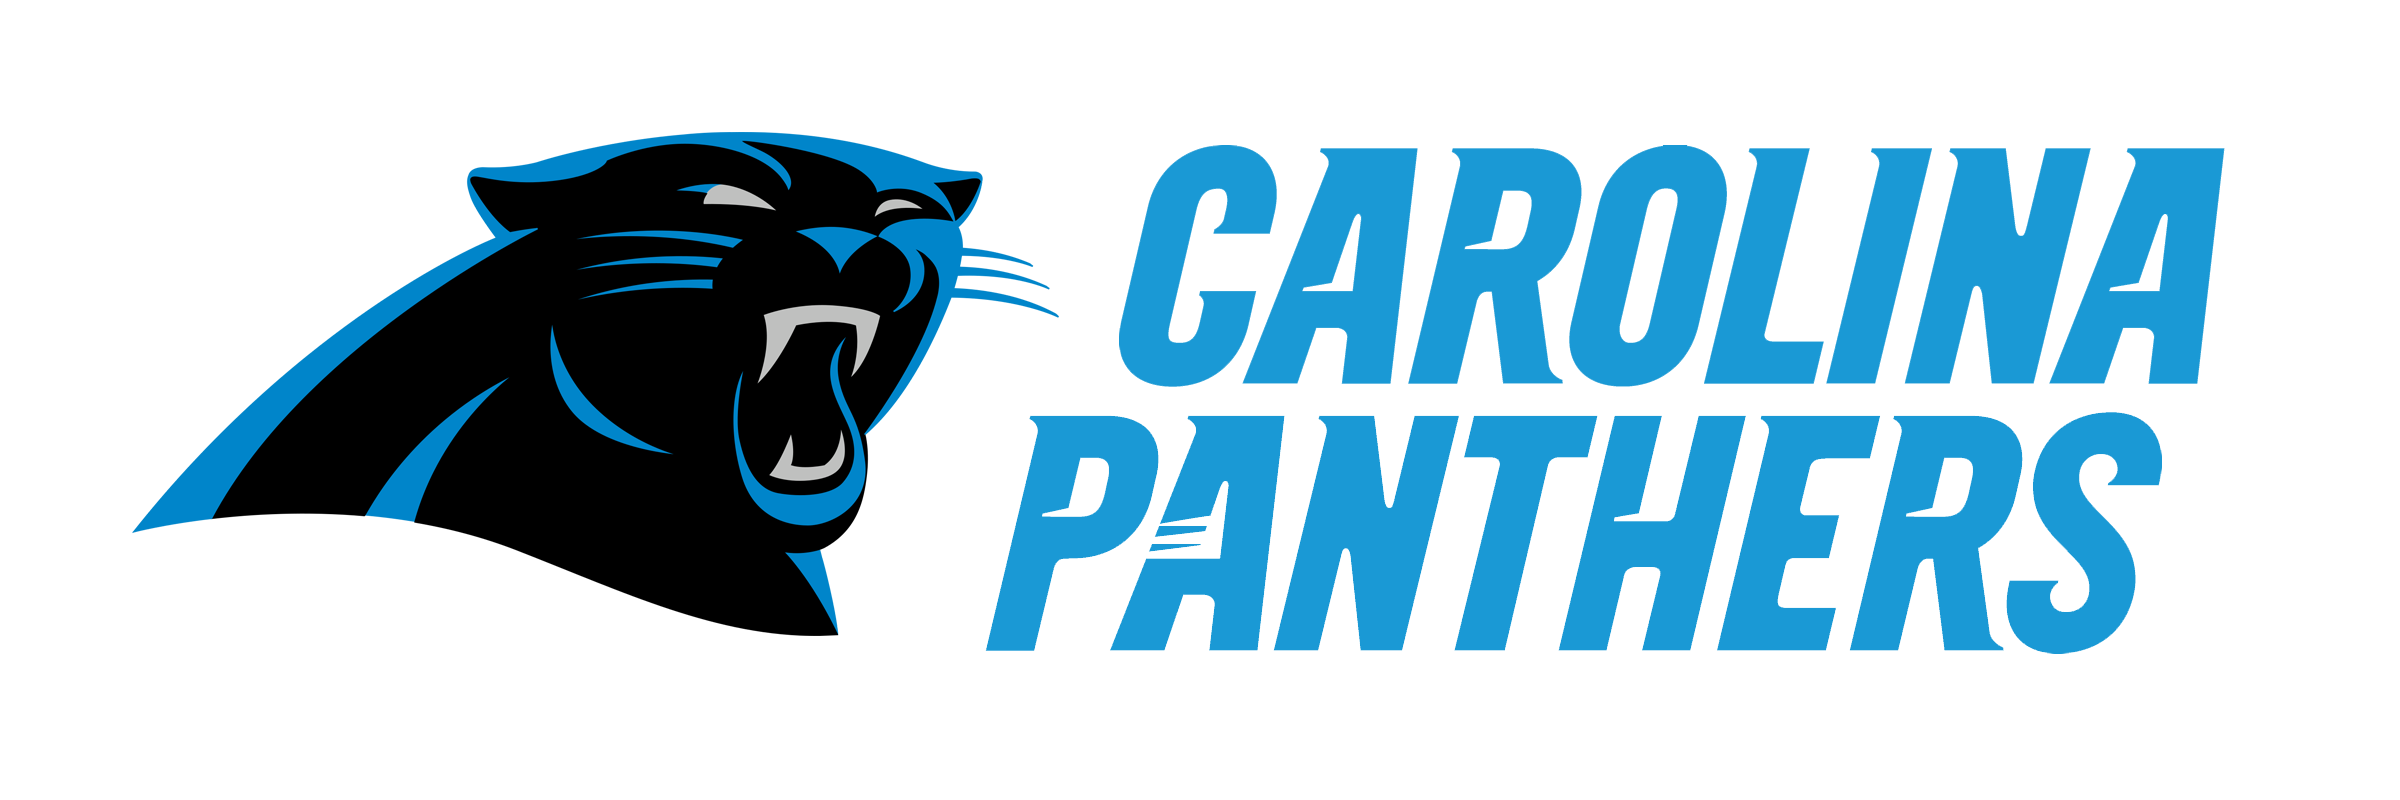 Carolina Panthers Vector At Getdrawings Free Download